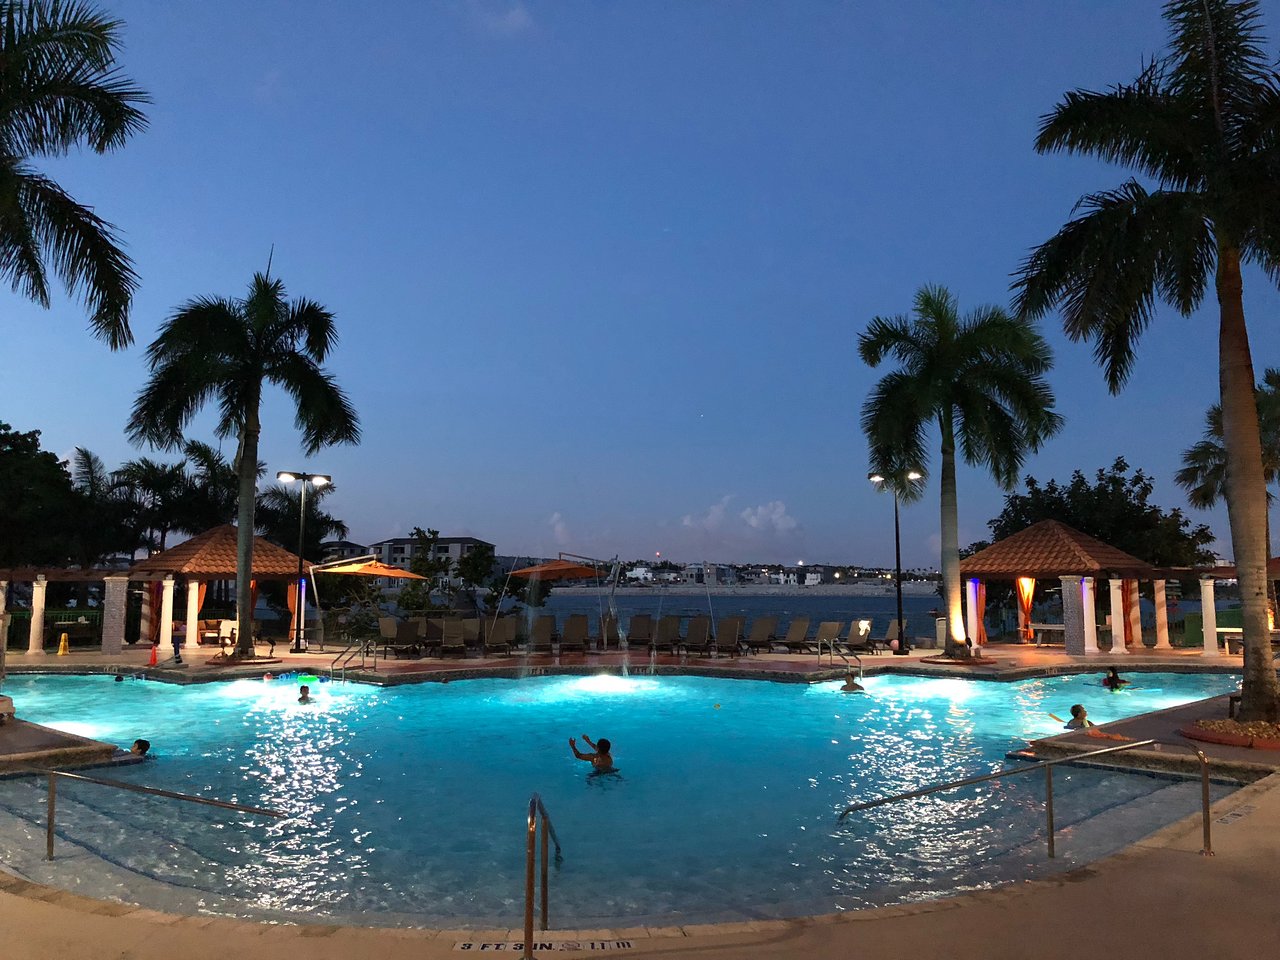 Marriott's Villas At Doral Pool Area